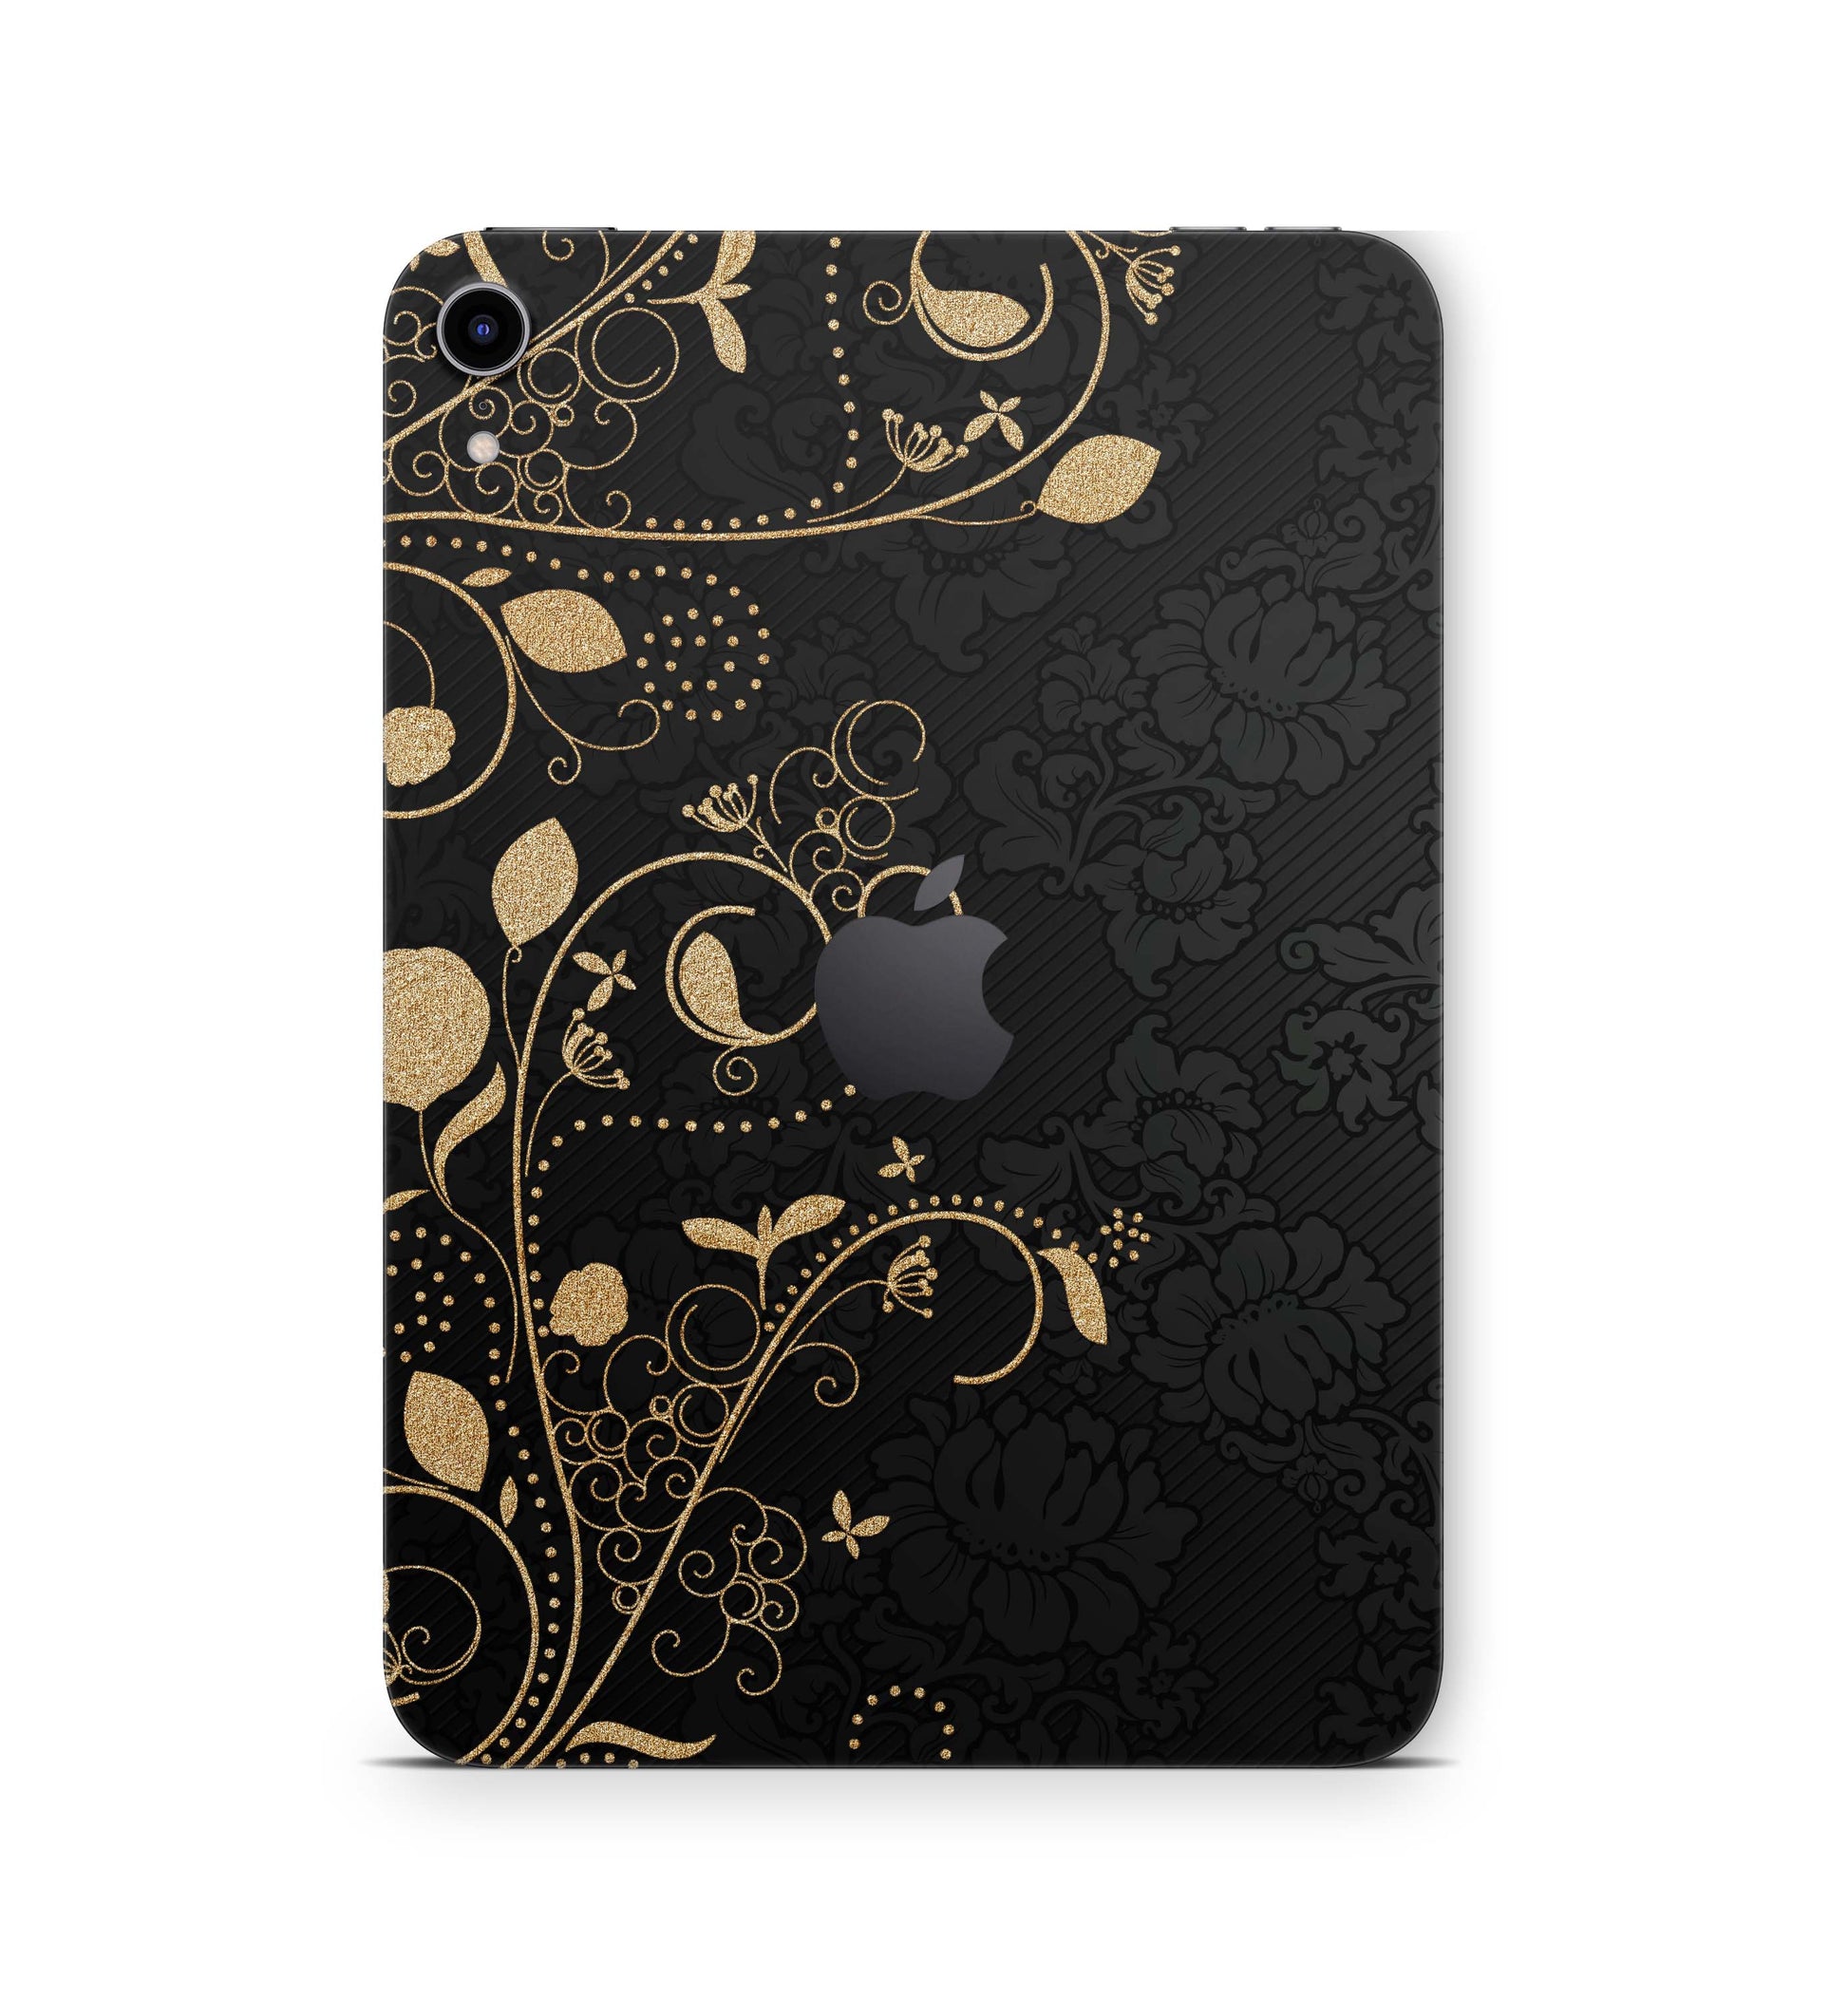 iPad Mini Skin Design Cover Folie Vinyl Skins & Wraps für alle iPad Mini Modelle Aufkleber Skins4u Darkmoon  